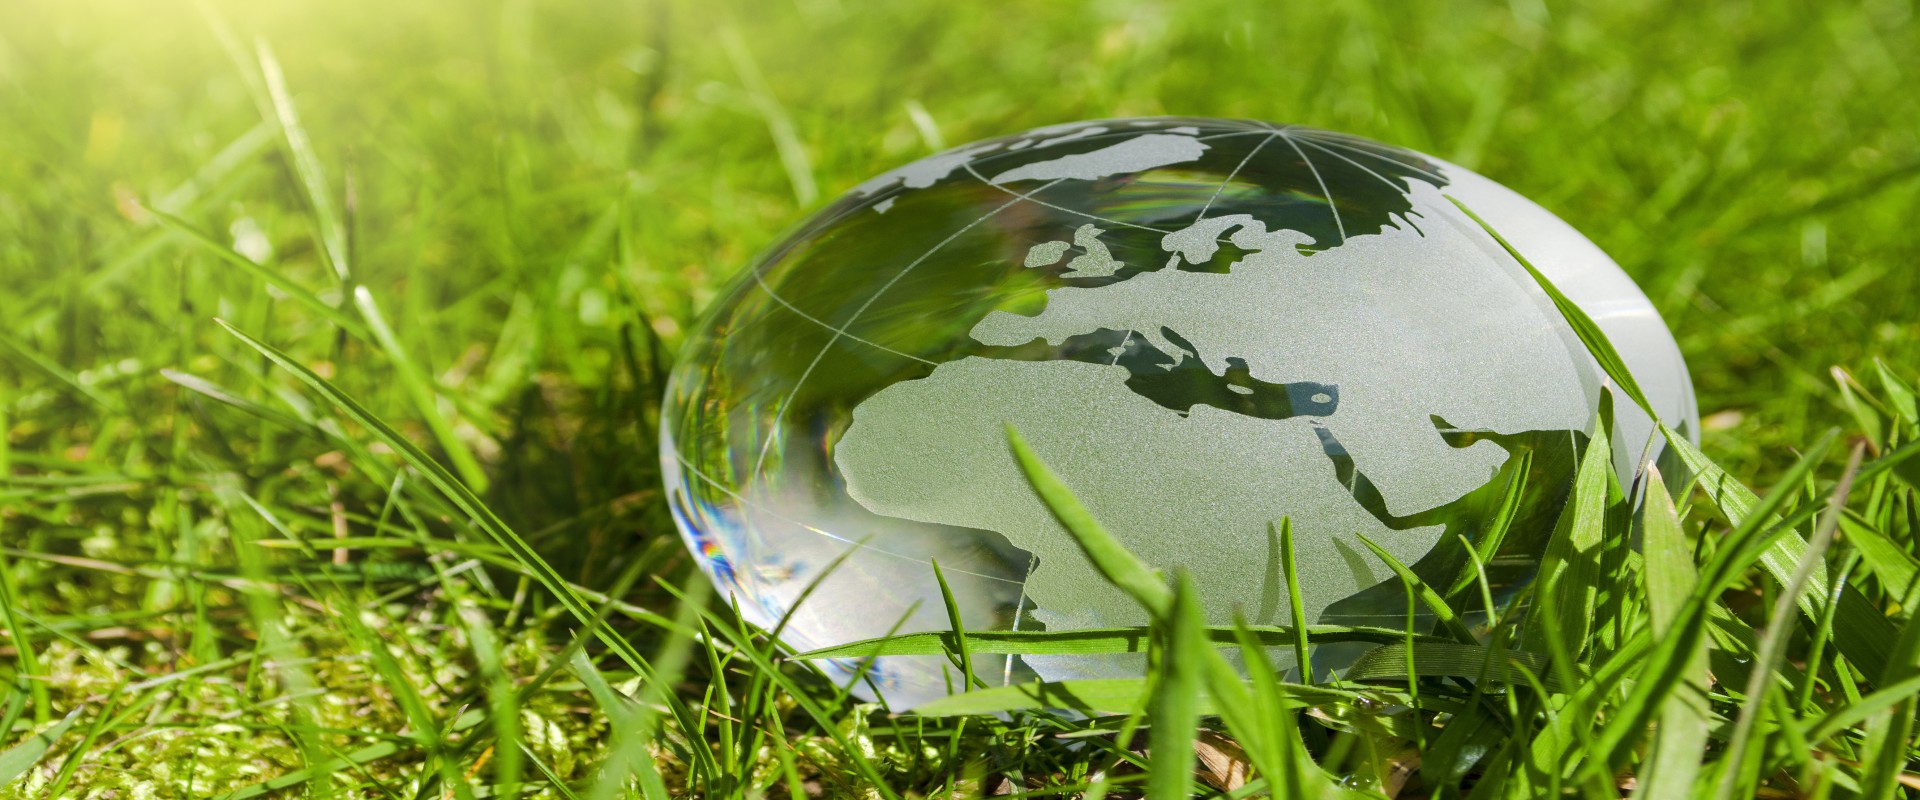 Glass globe in juicy grass